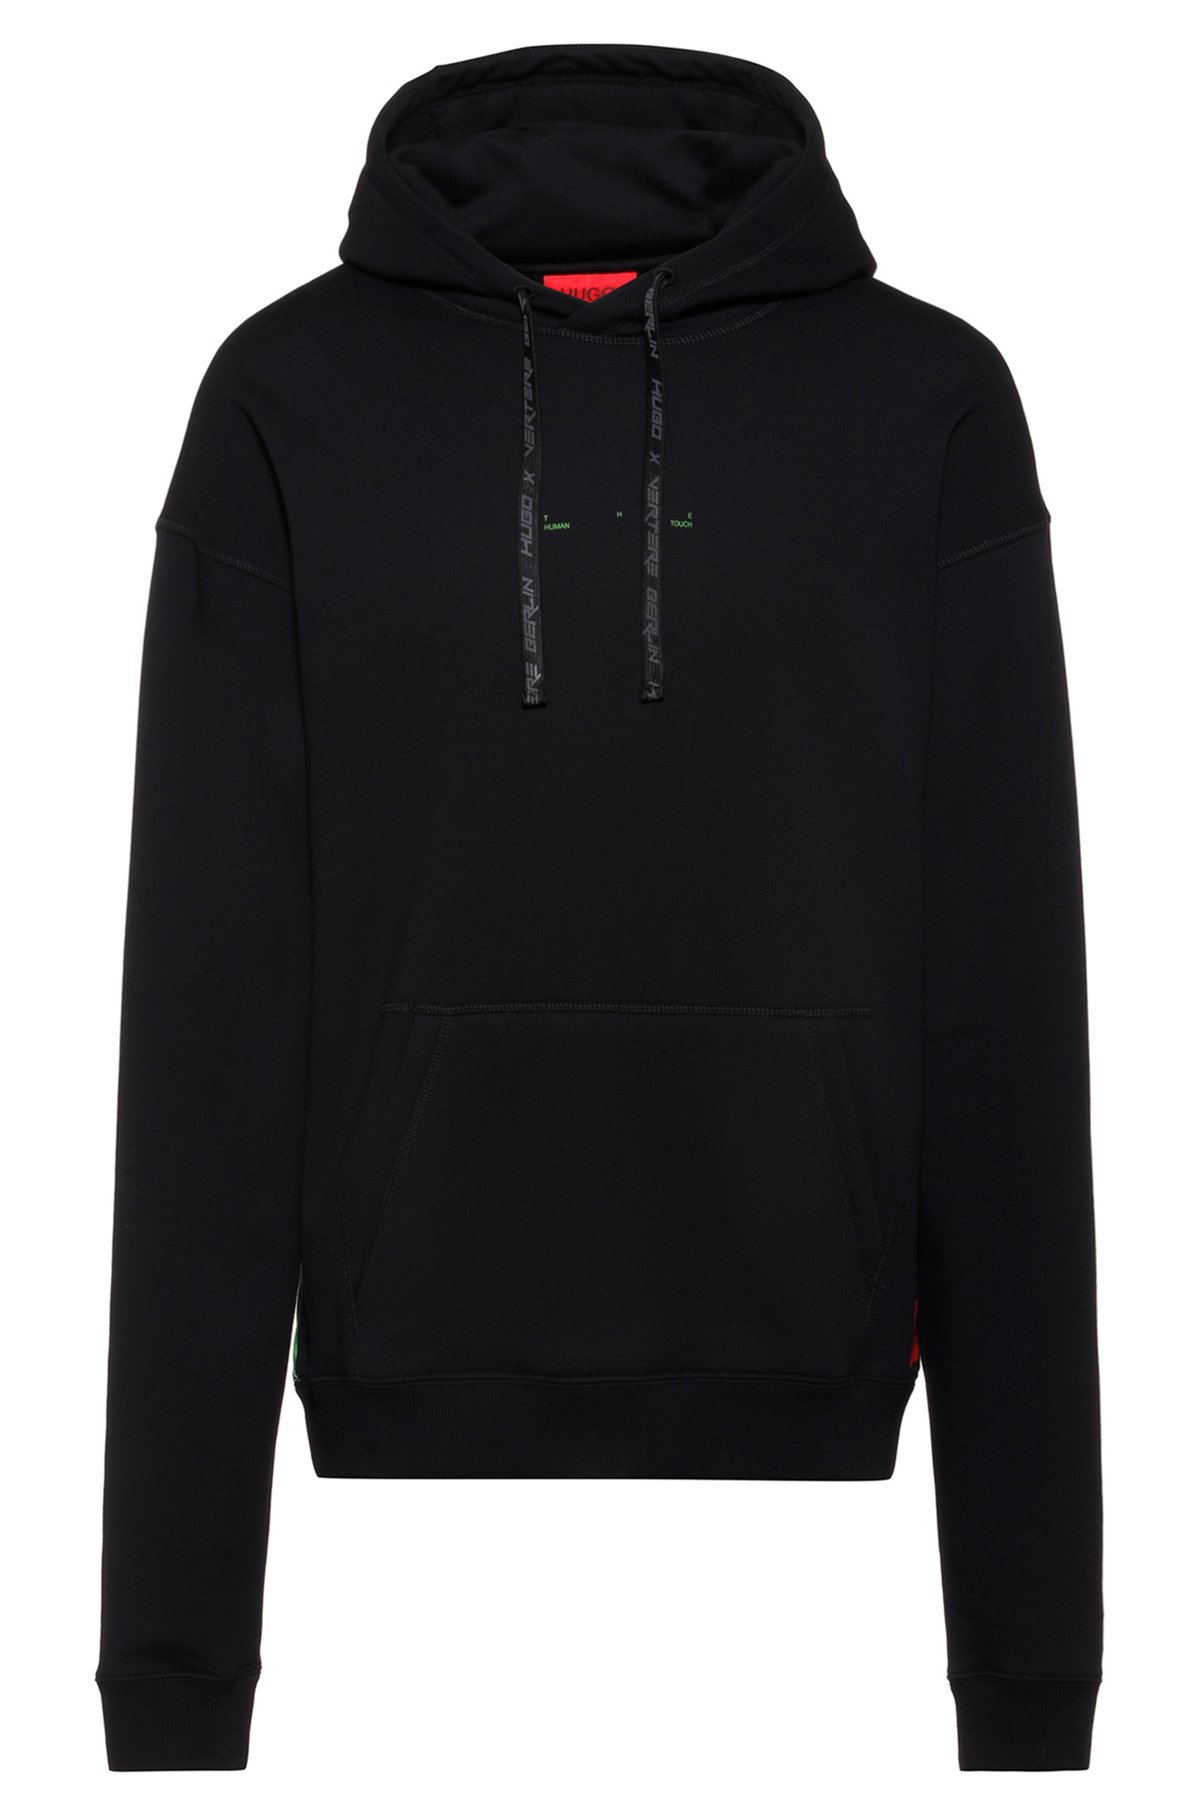 Hooded sweatshirt with collaborative branded artwork, Black